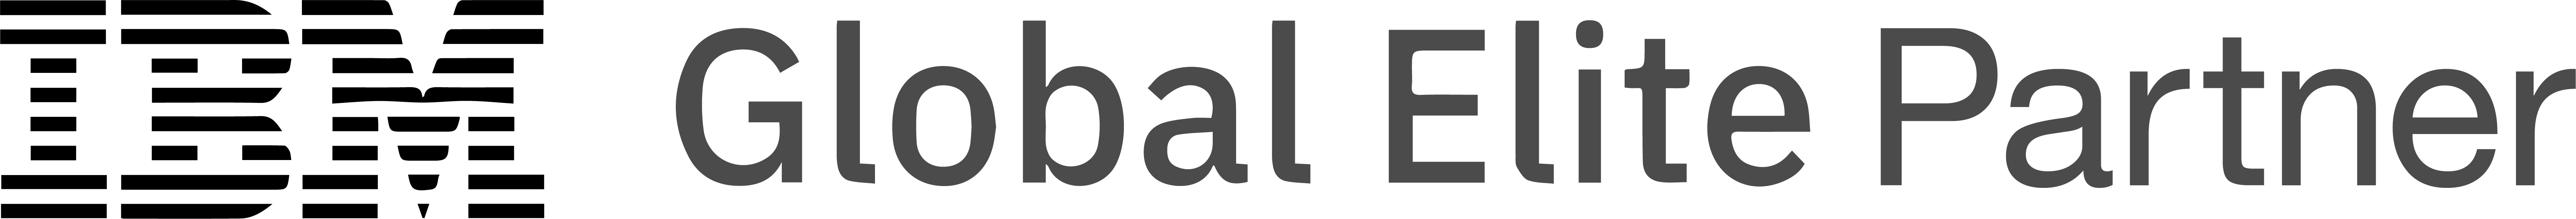 ibm elite partner logo-main